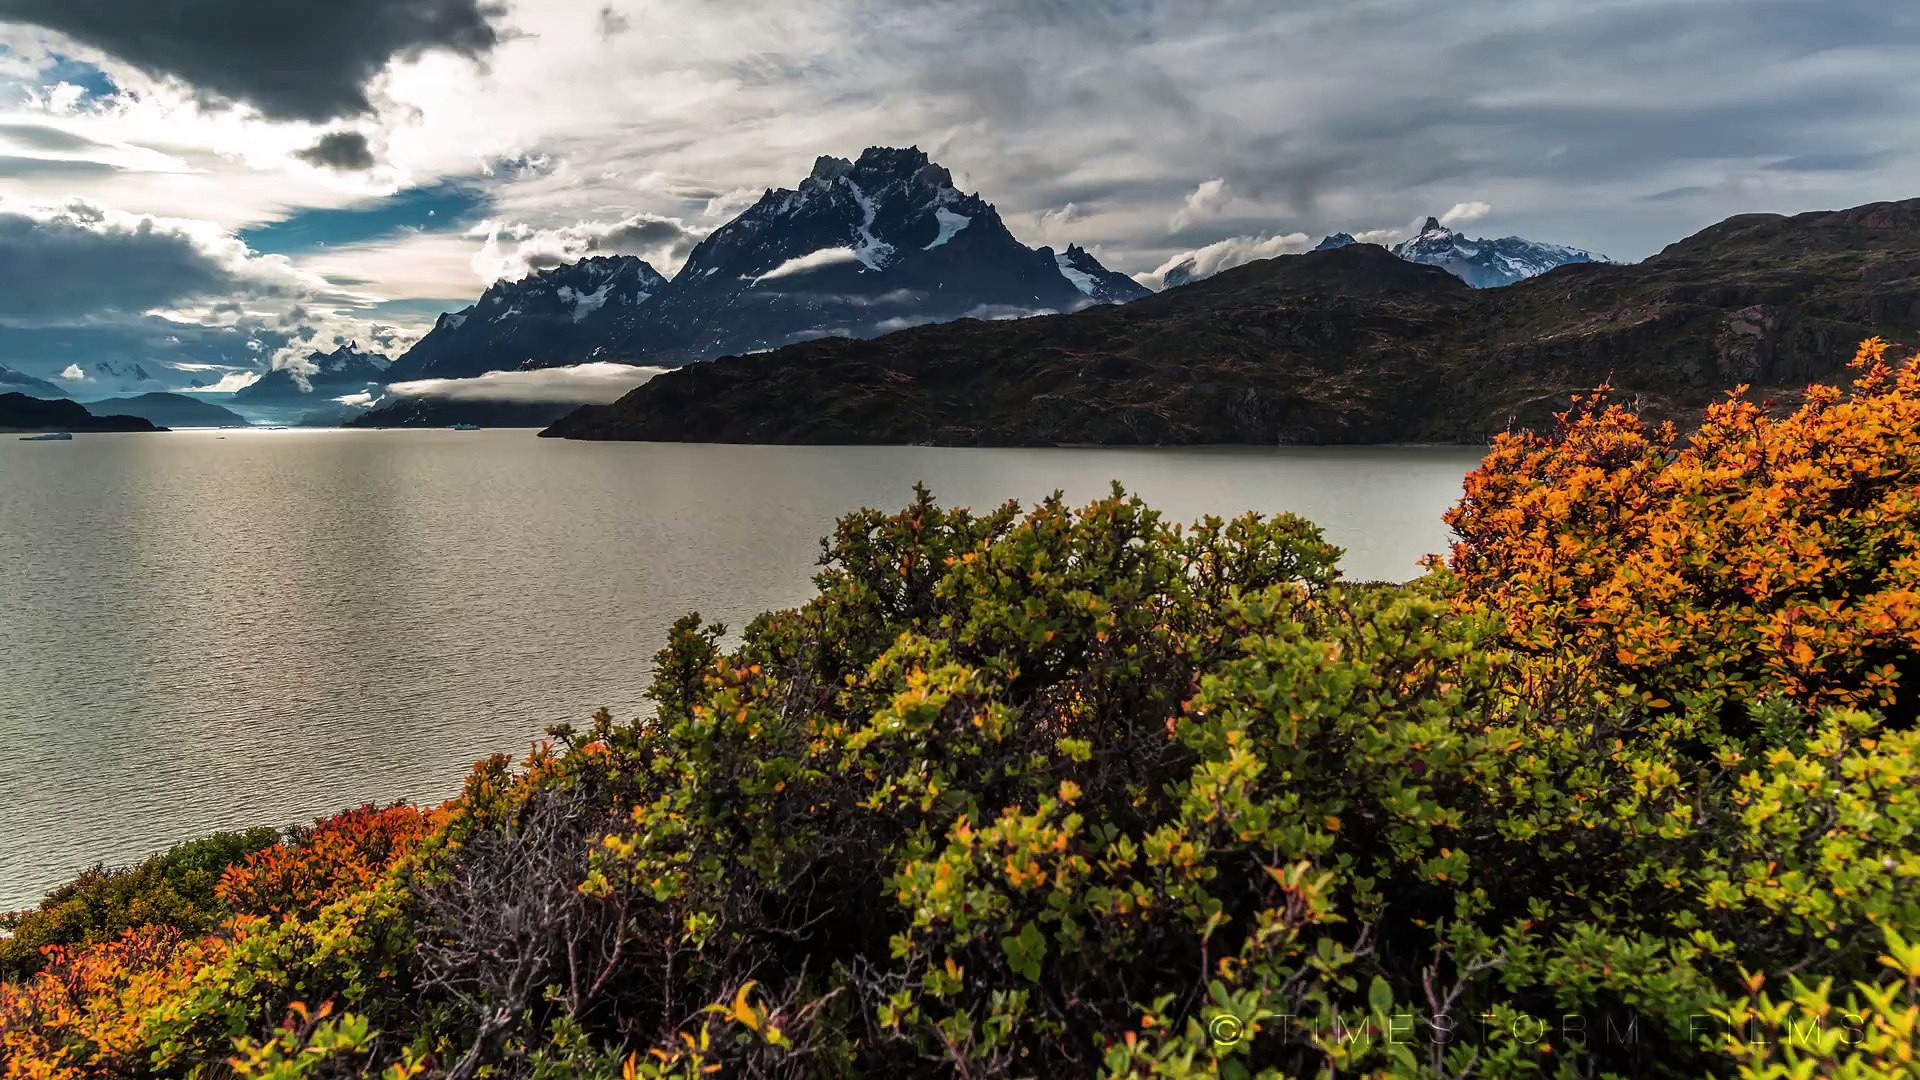 Patagonia looks like heaven in this 8K timelapse video!